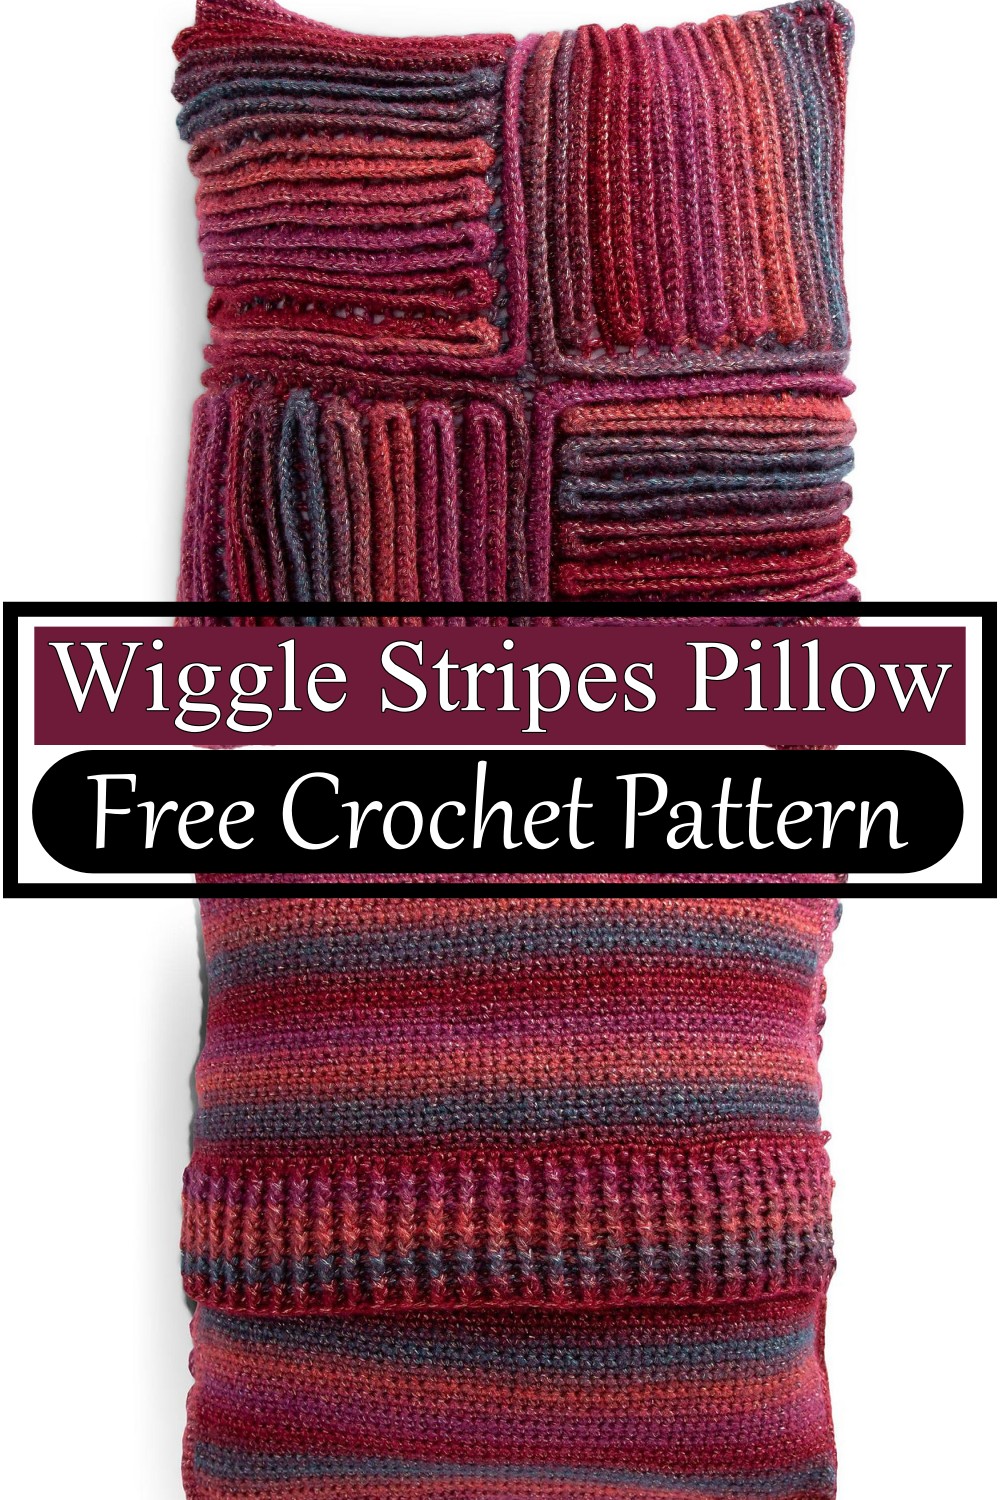 Wiggle Stripes Pillow